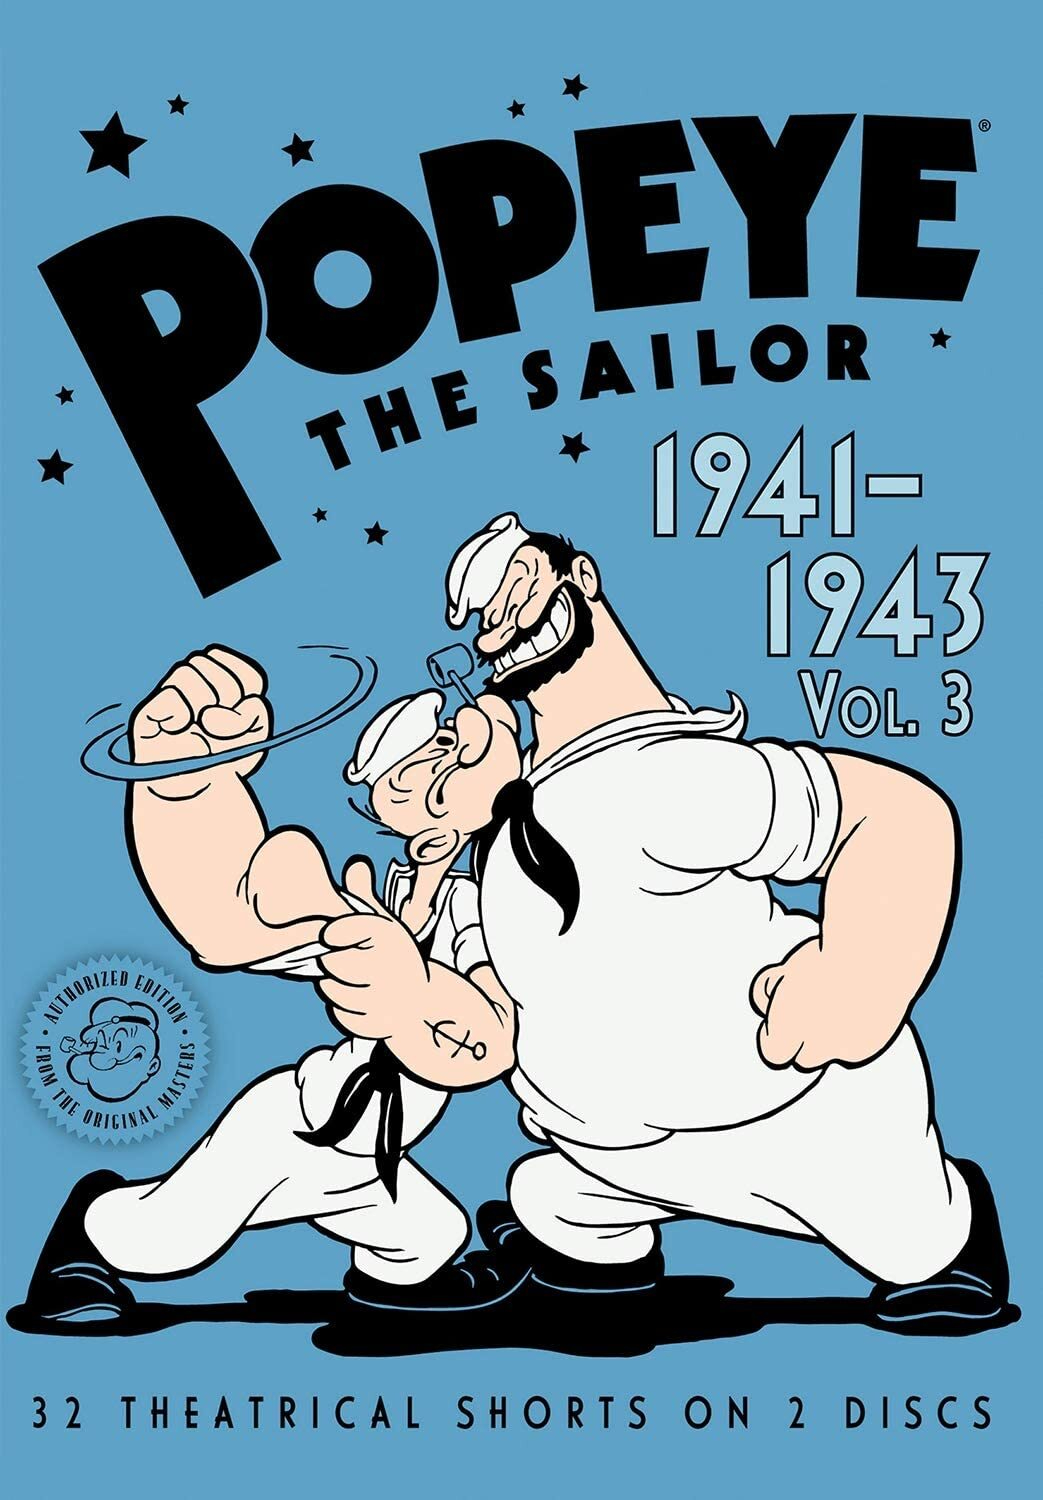 Popeye The Sailor VO DVDRIP x264 1941-1943